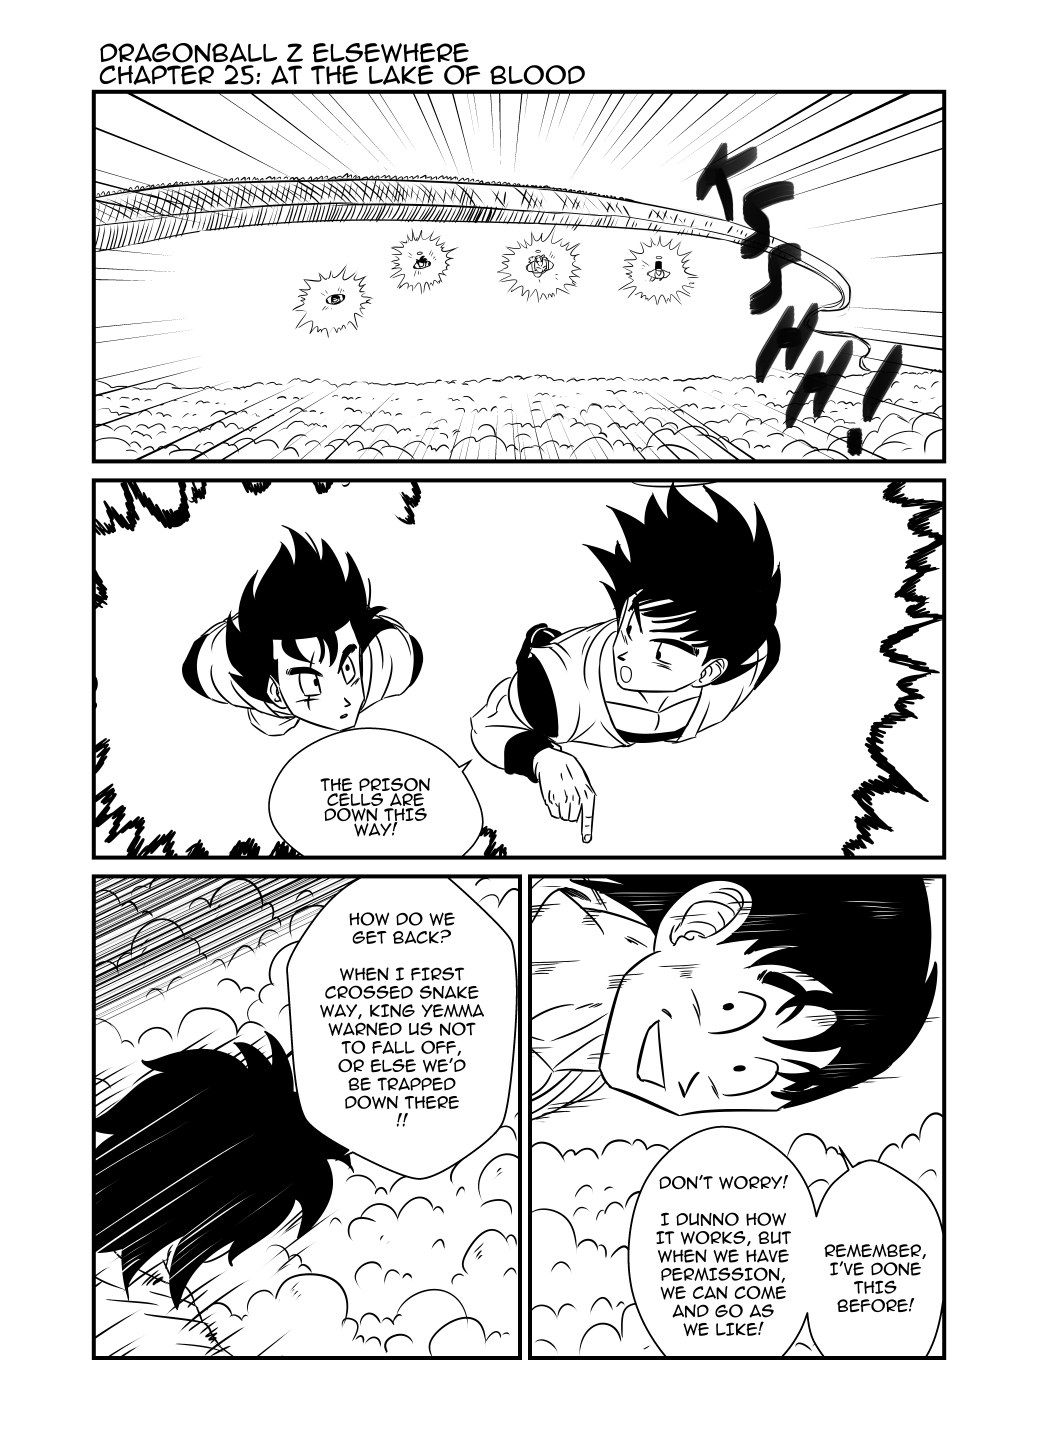 Dragon Ball Z Elsewhere (Doujinshi) Vol. 3 Ch. 25 At The Lake Of Blood